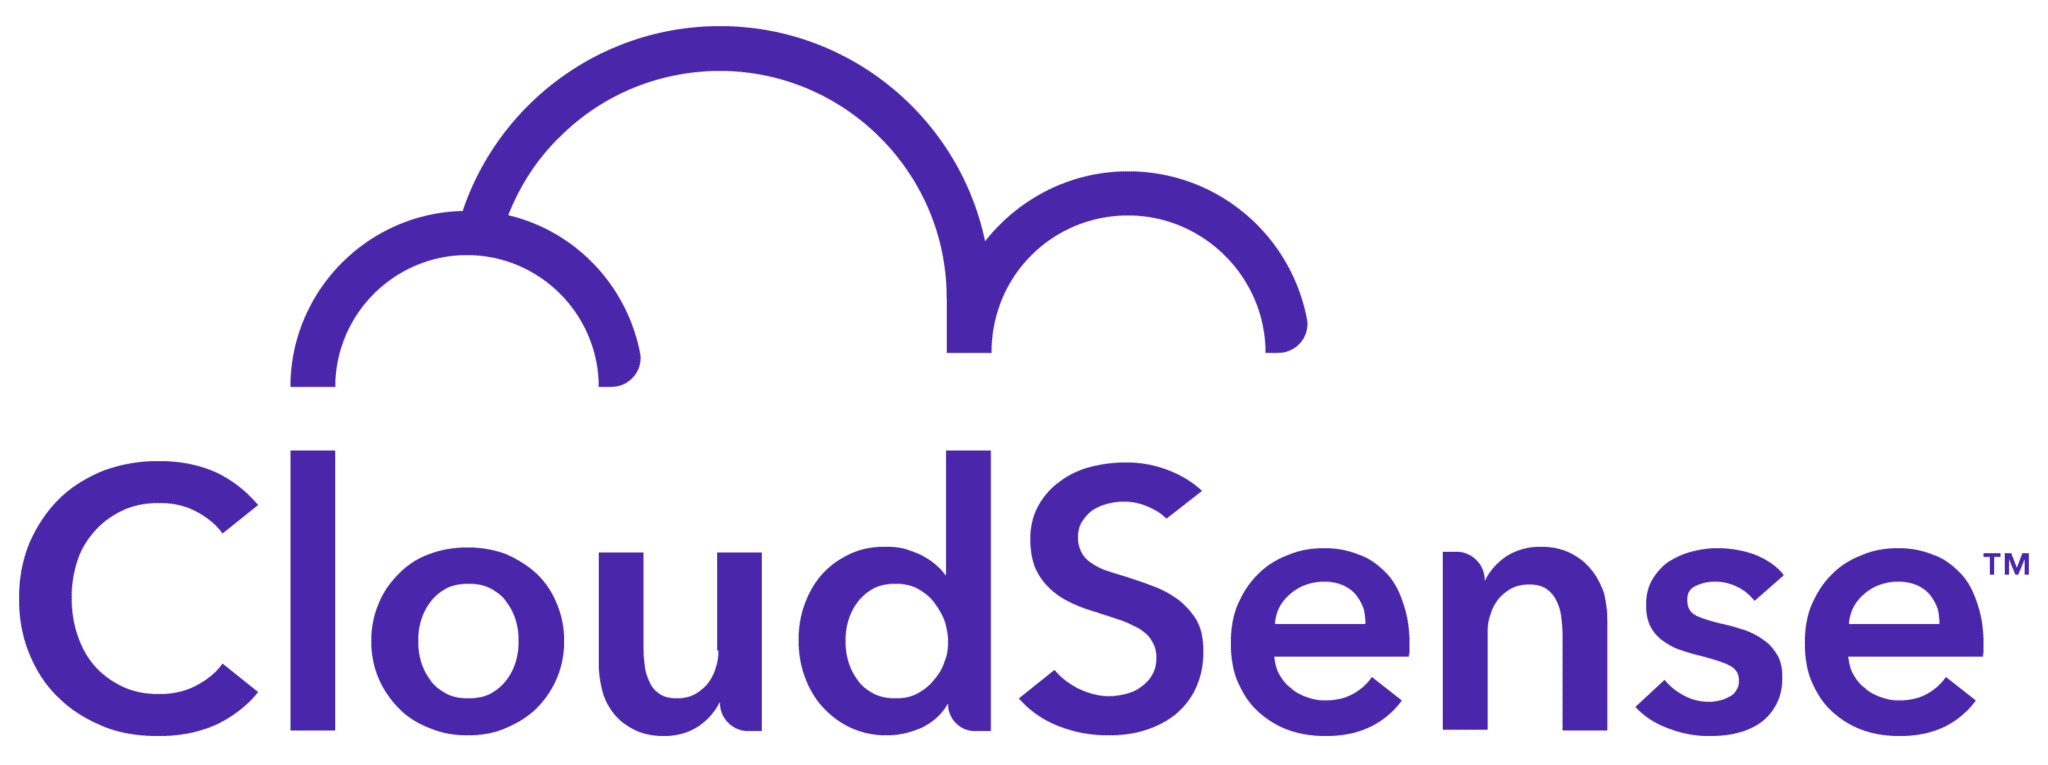 CloudSense logo